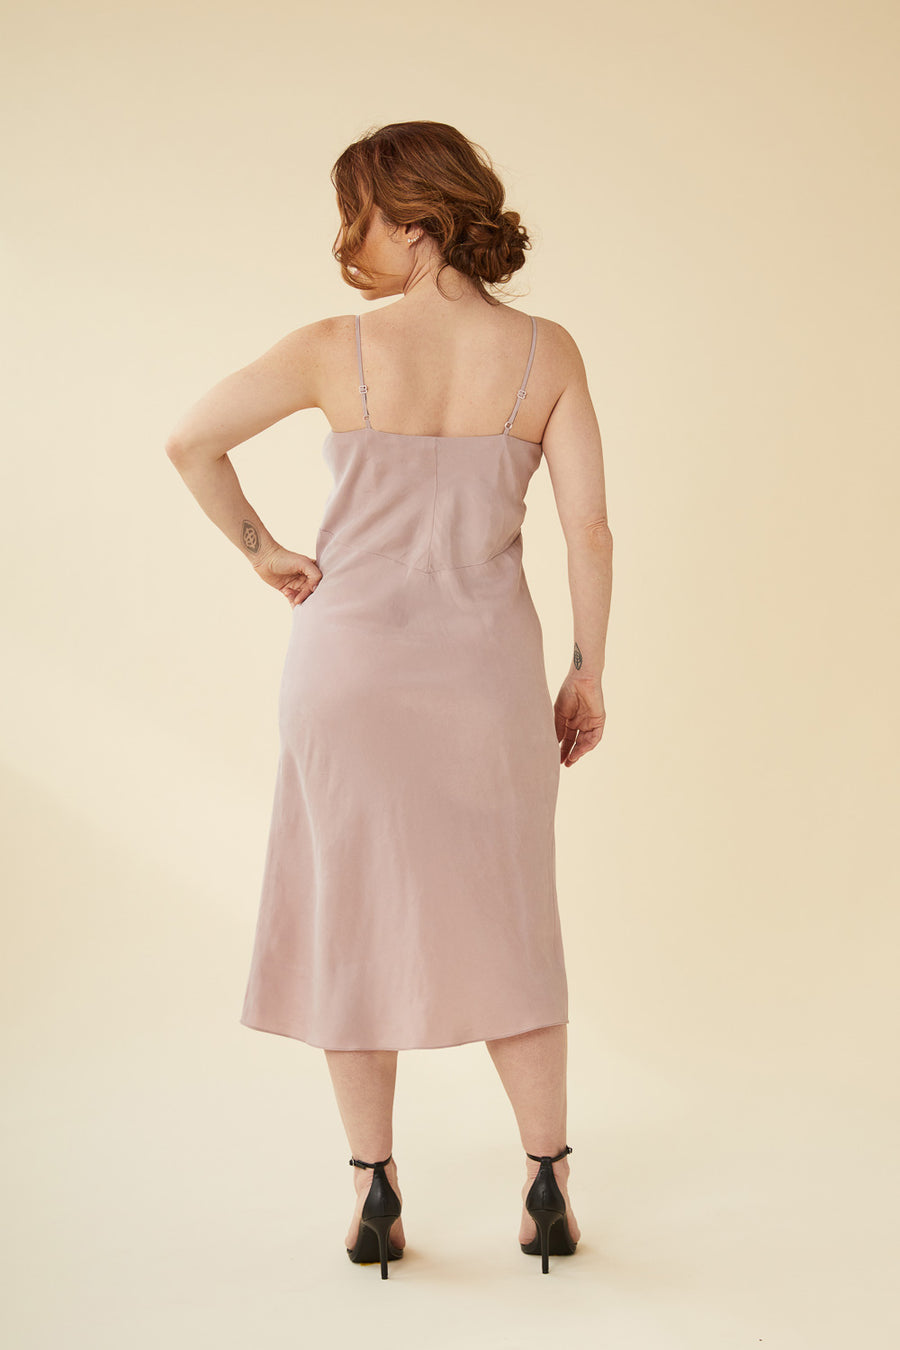 Simone Slip Pattern, Bias Cut Slip Dress Pattern